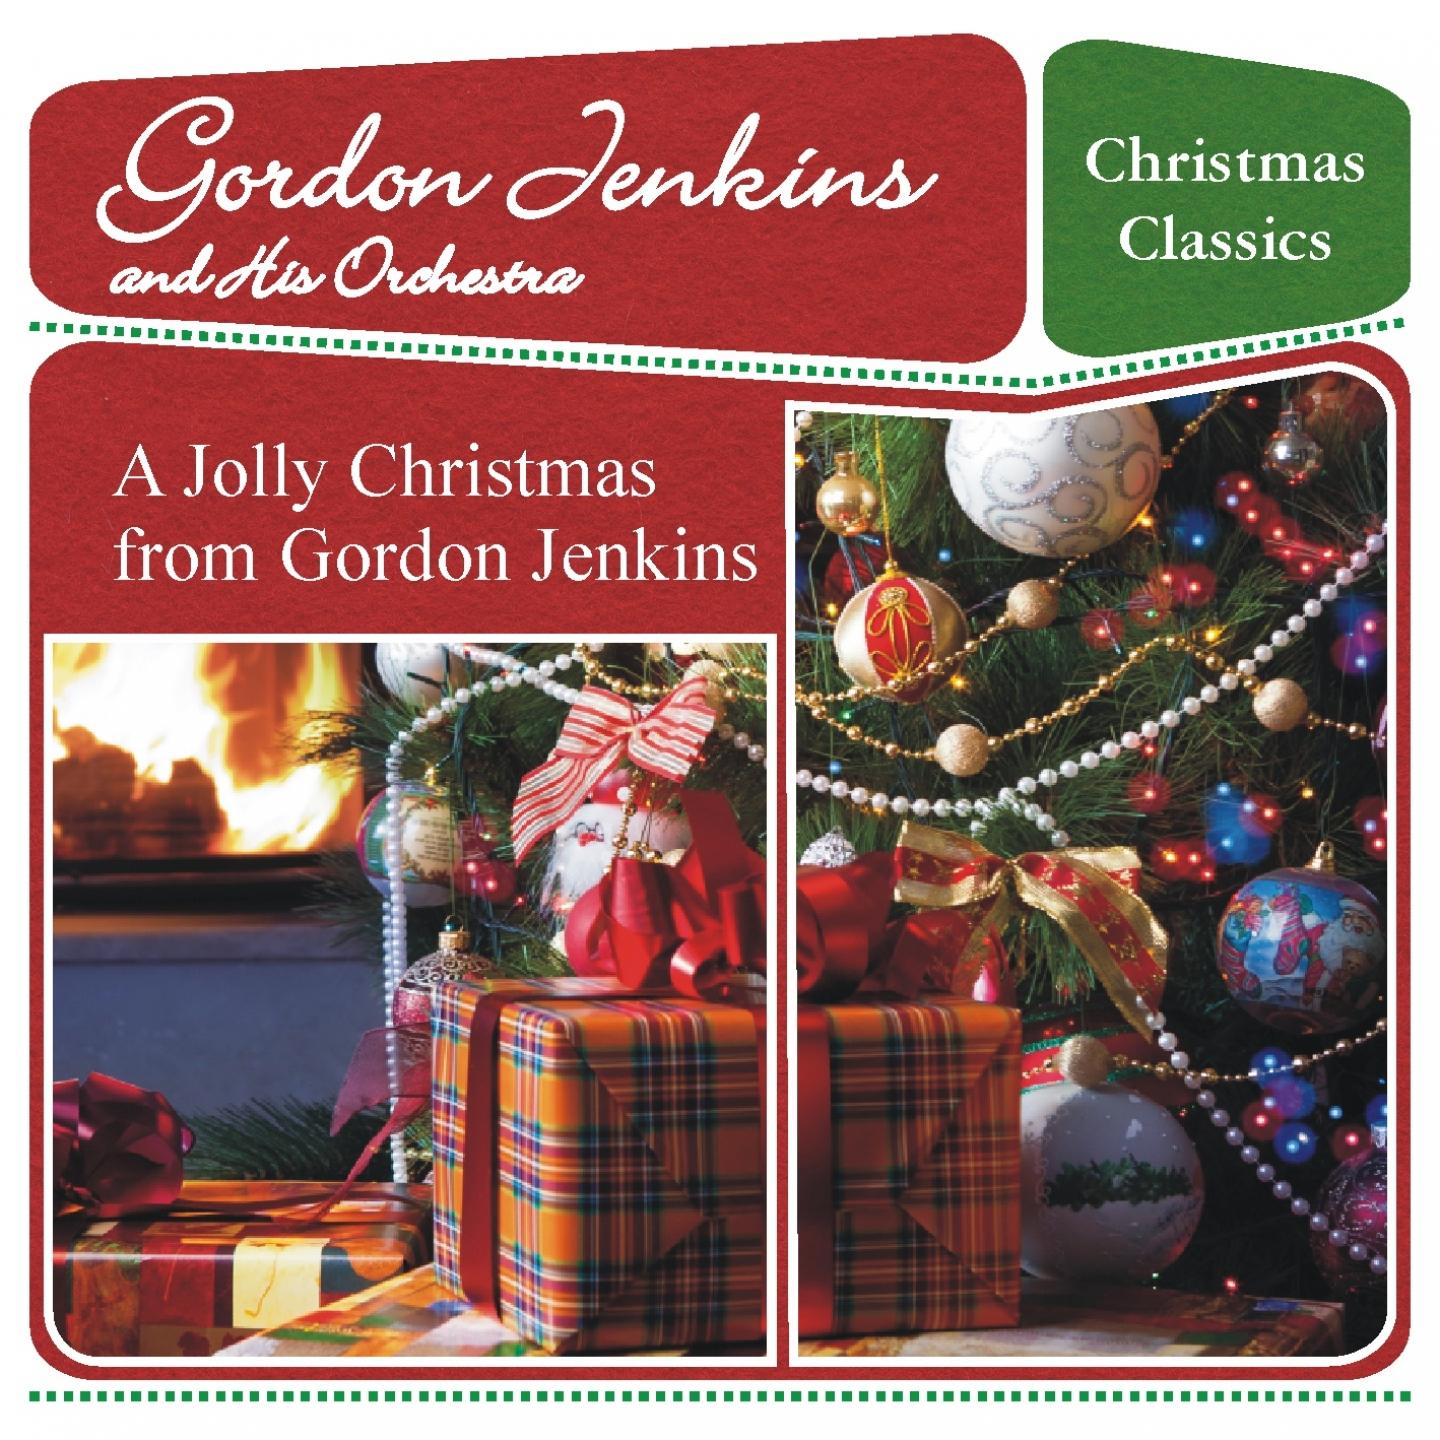 A Jolly Christmas from Gordon Jenkins